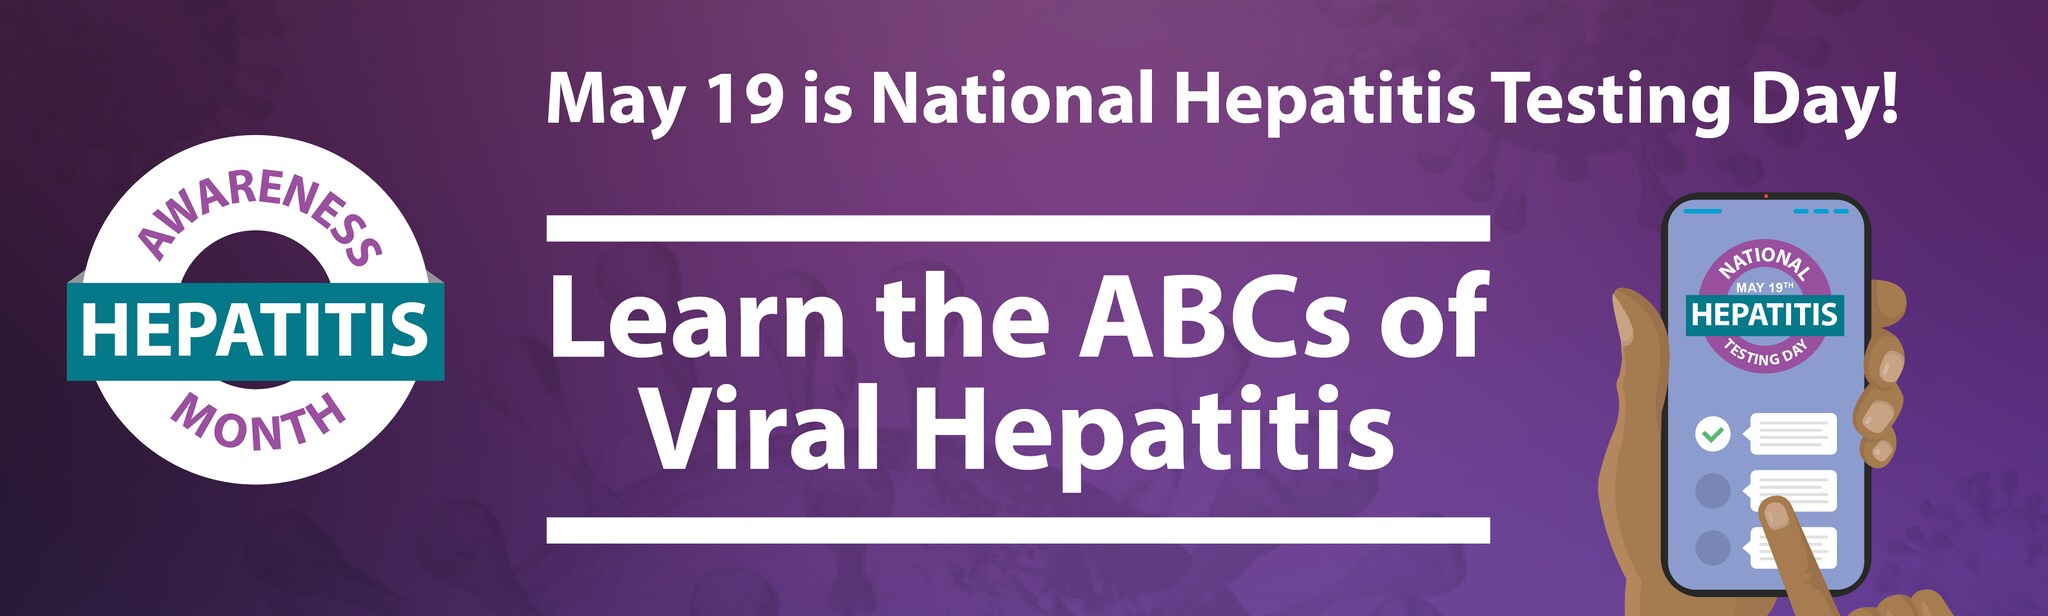 Hepatitis Awareness Month. Learn the ABCs the Virus Hepatitis. May 19 is Hepatitis Testing Day!